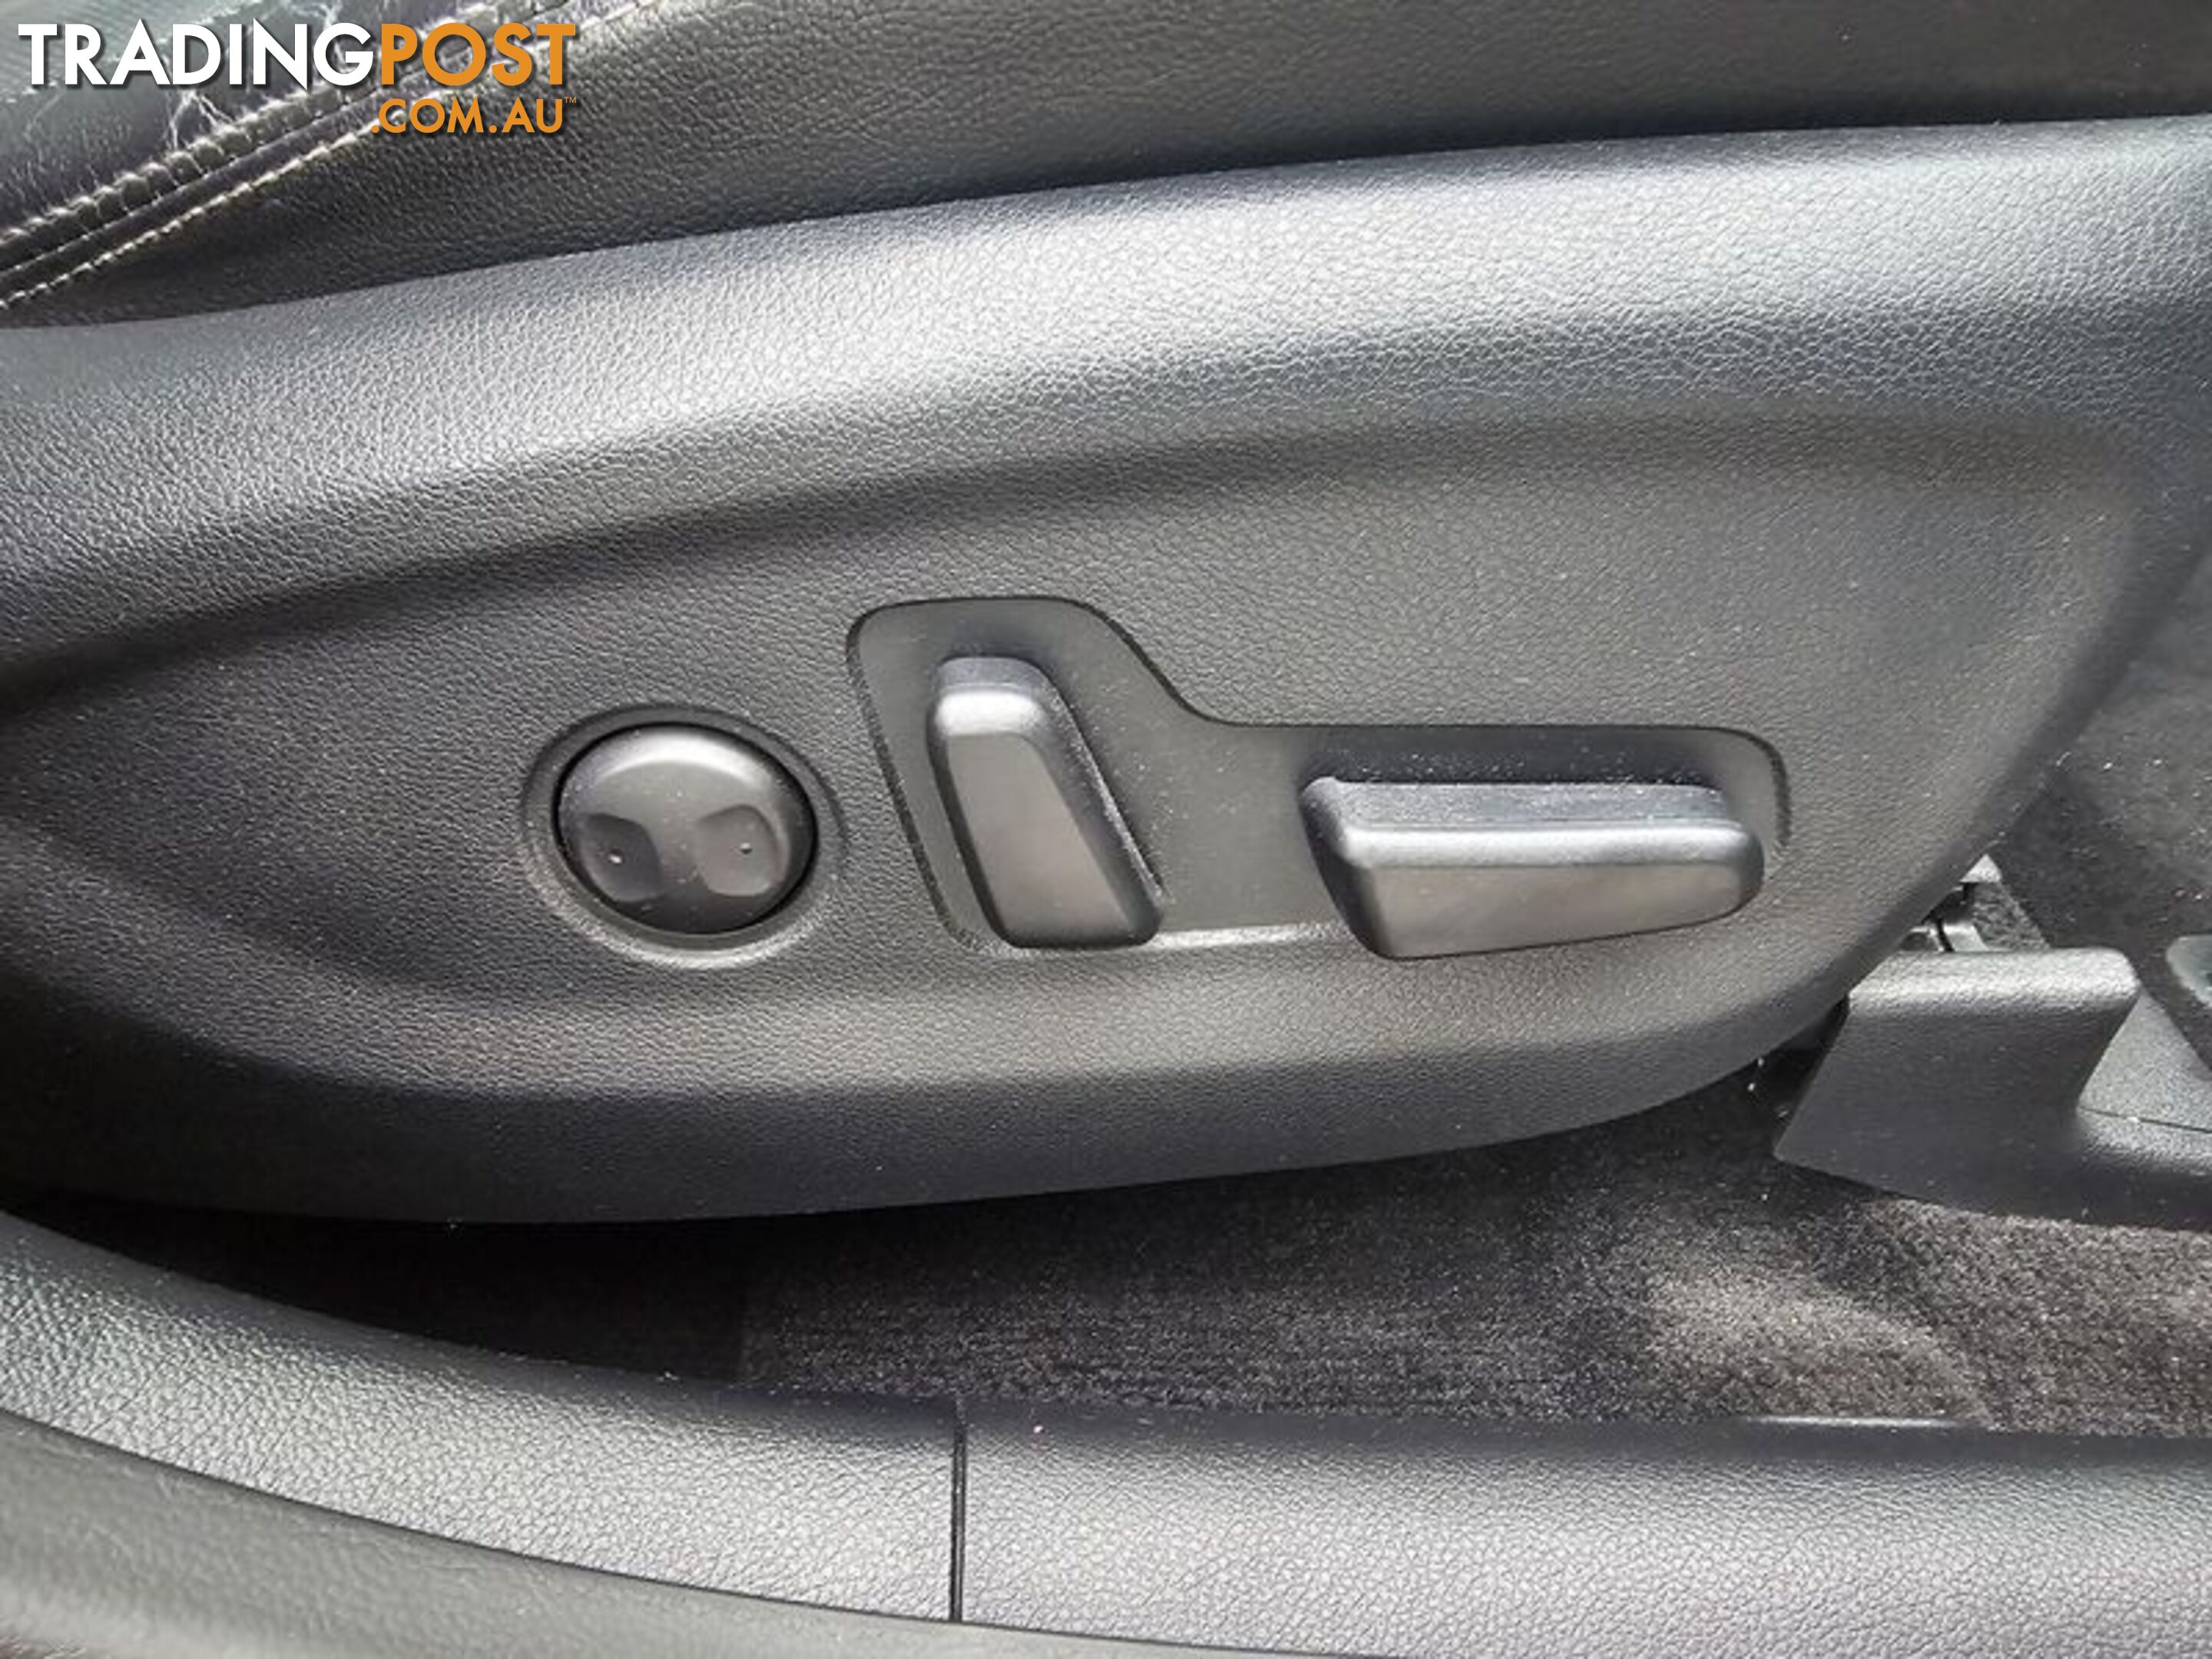 2016 Kia Sportage Platinum QL SUV